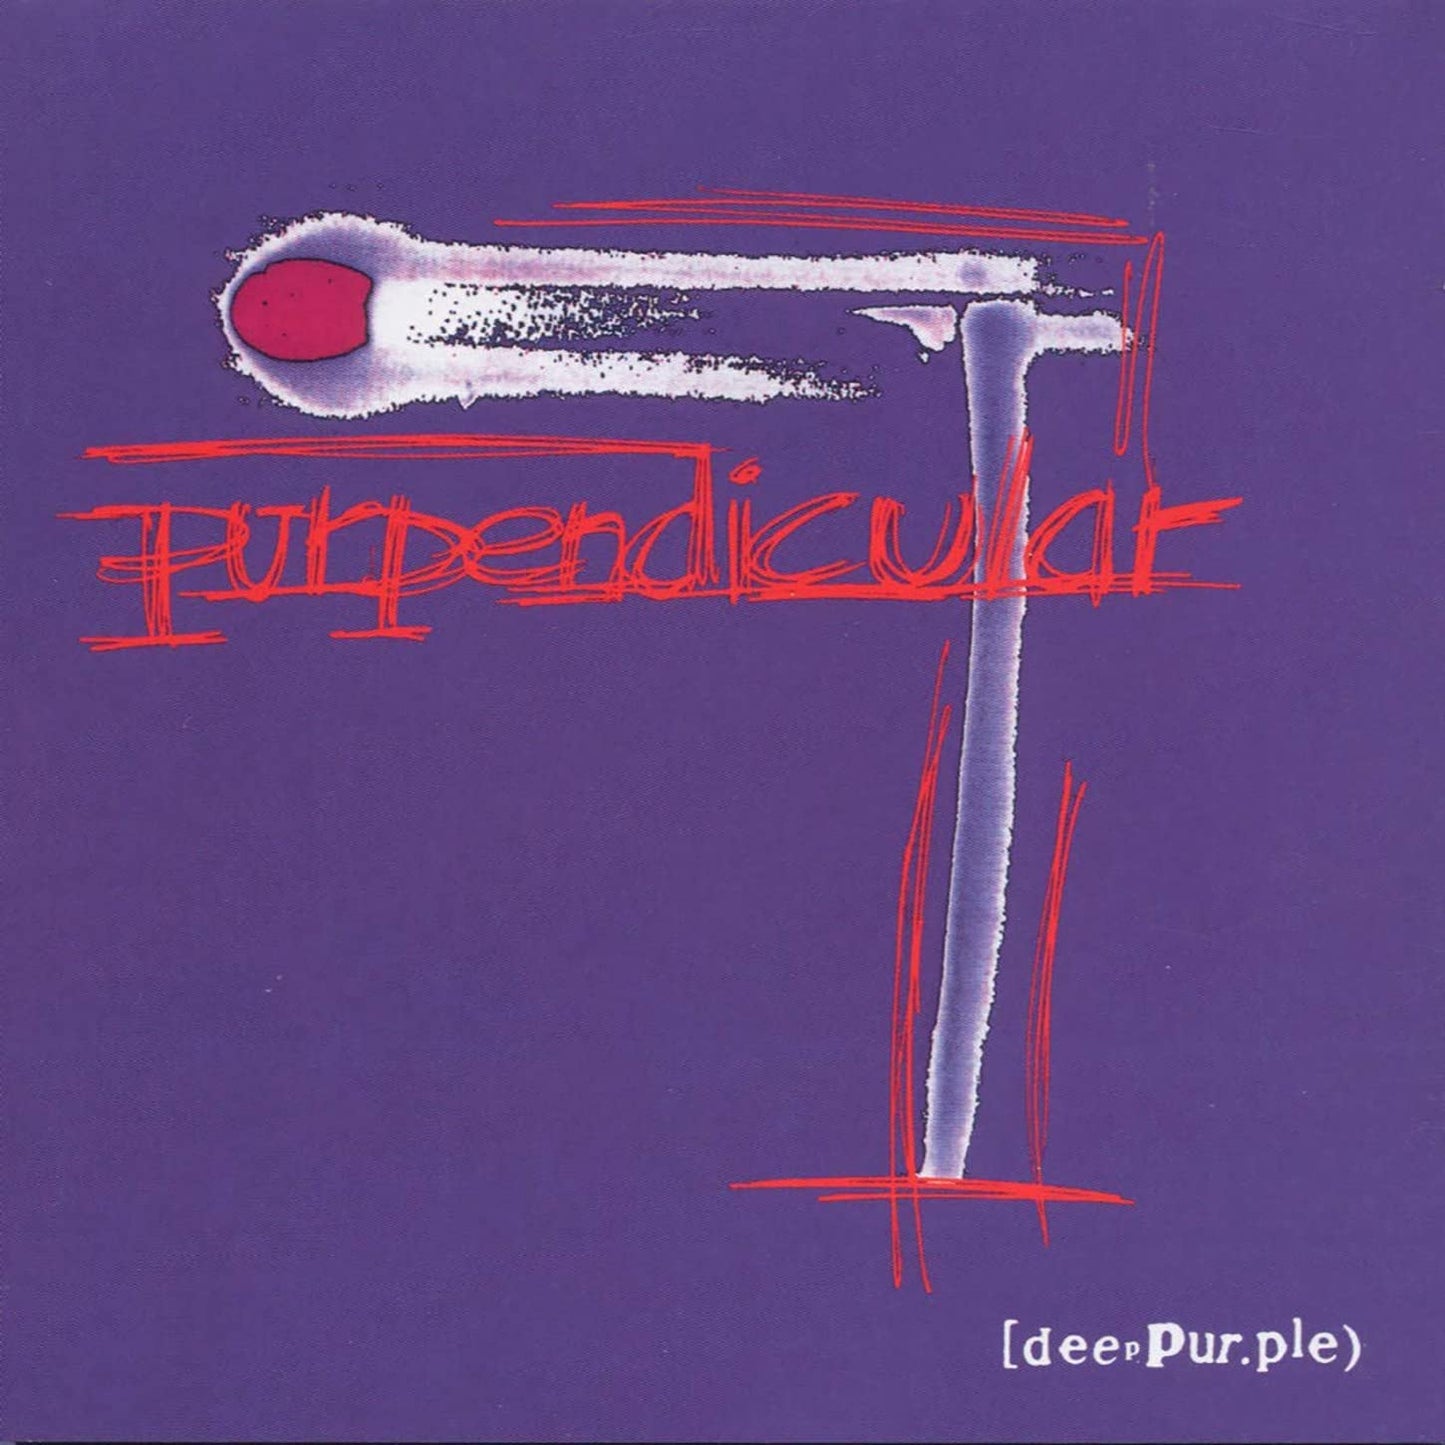 Deep Purple - Purpendicular - CD